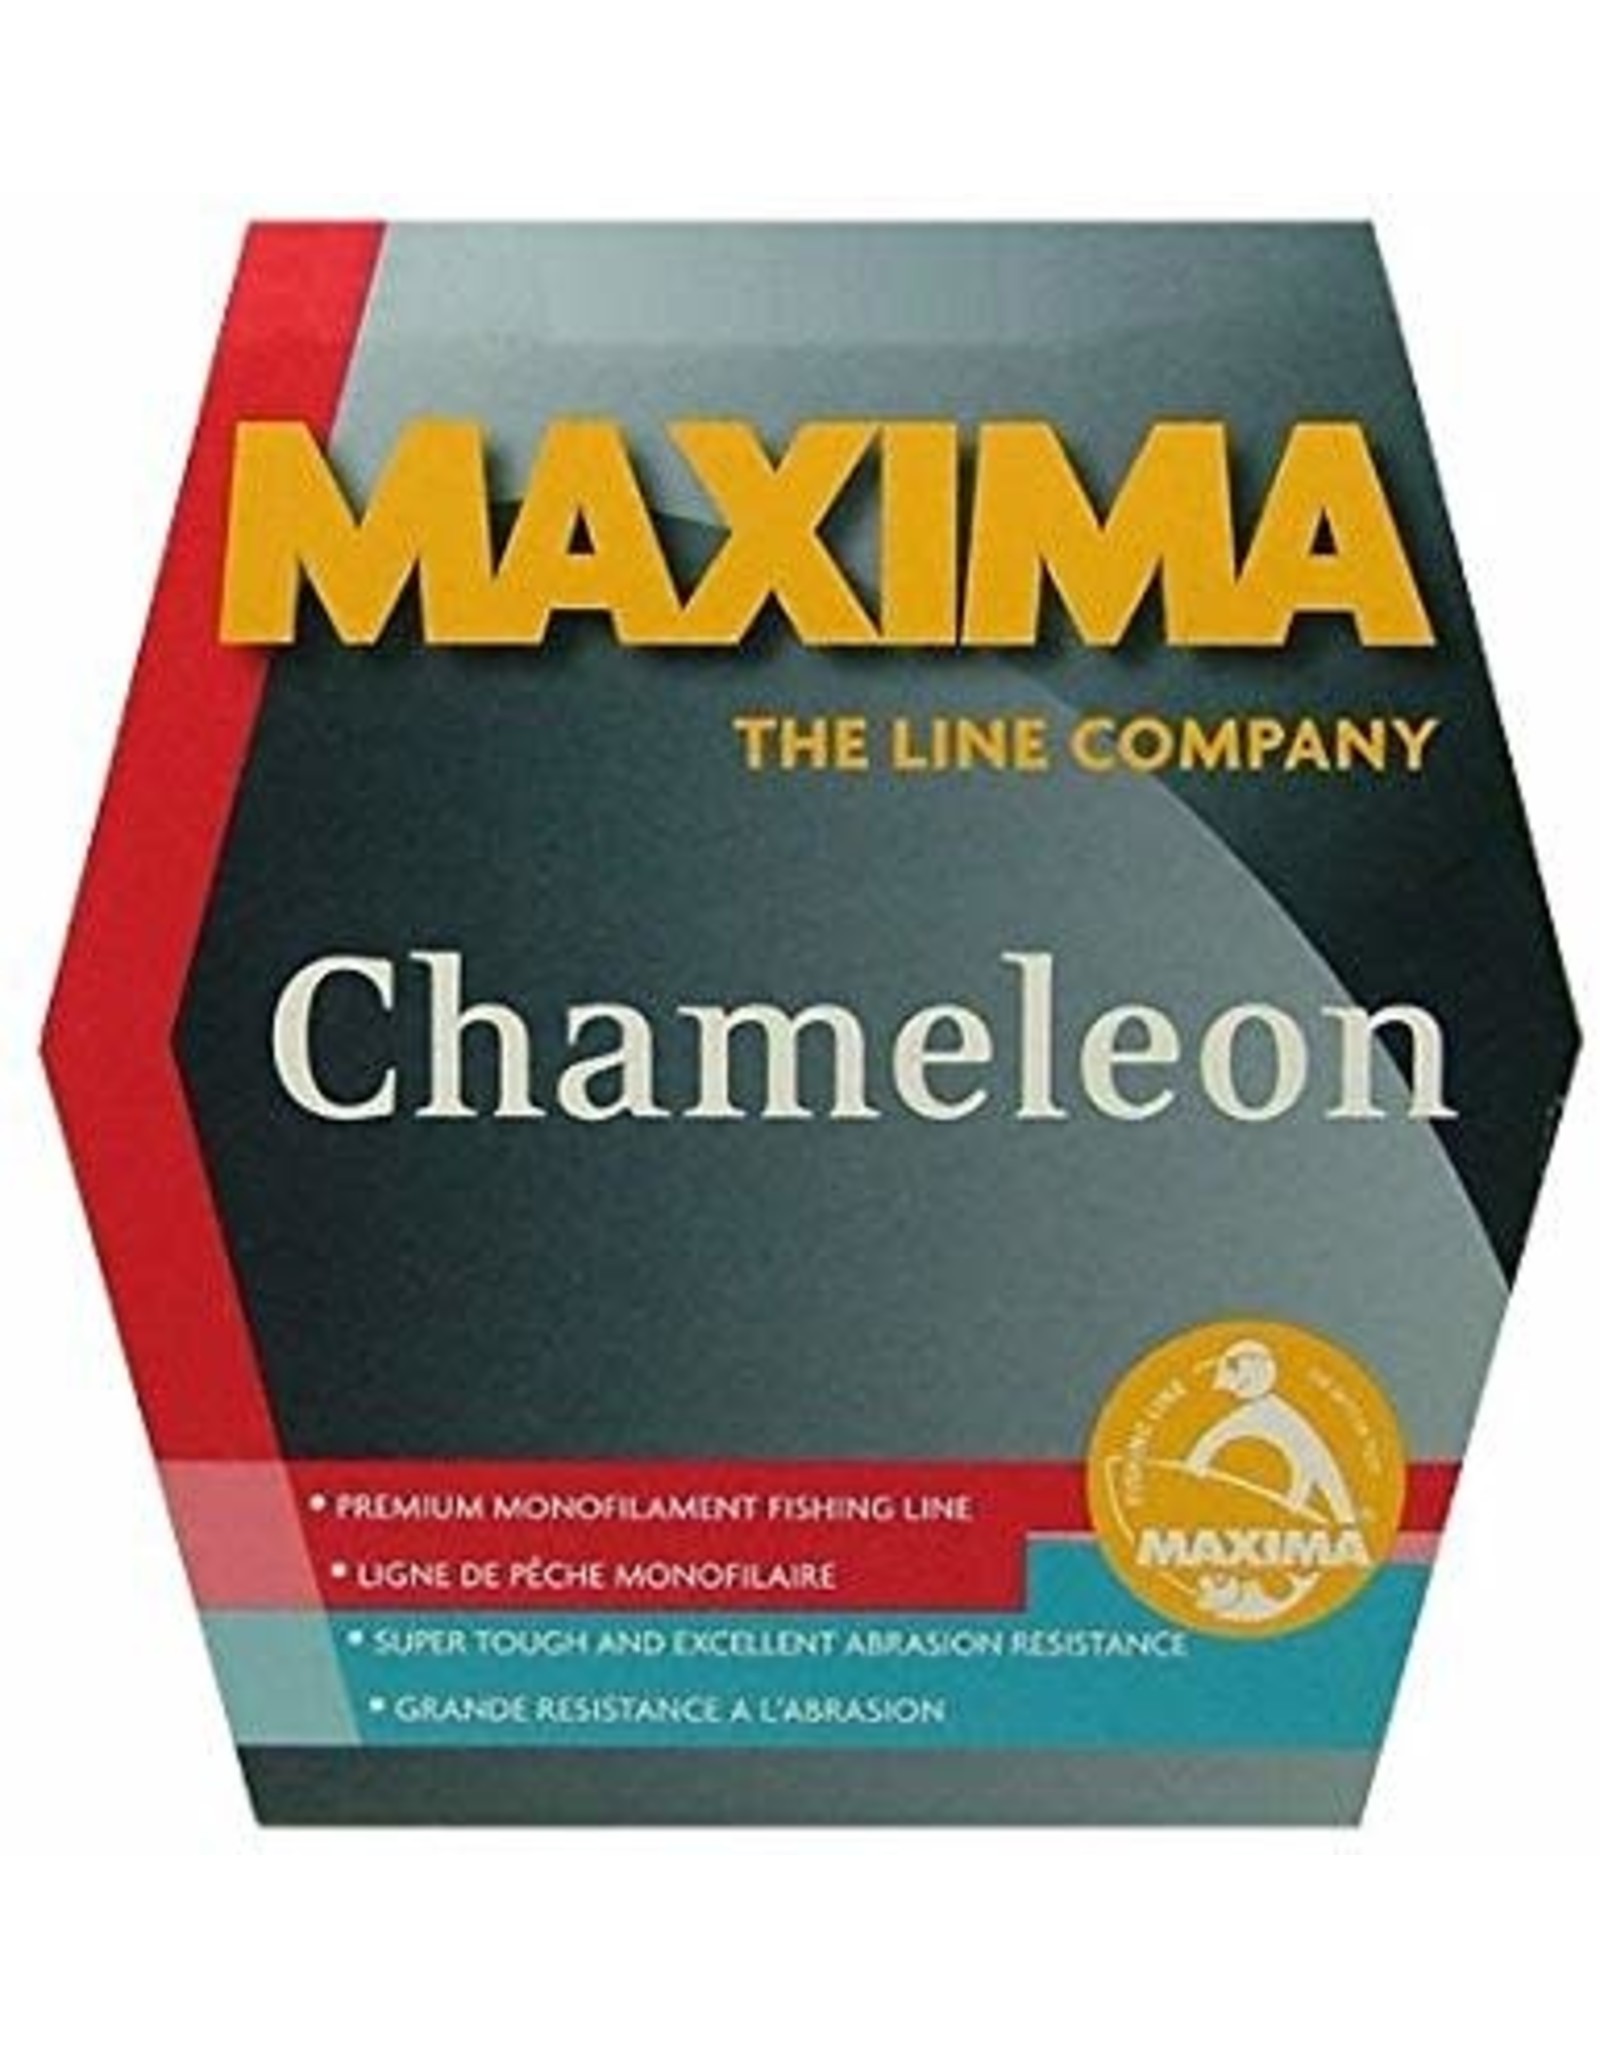 Maxima Chameleon 250 Yds 20#